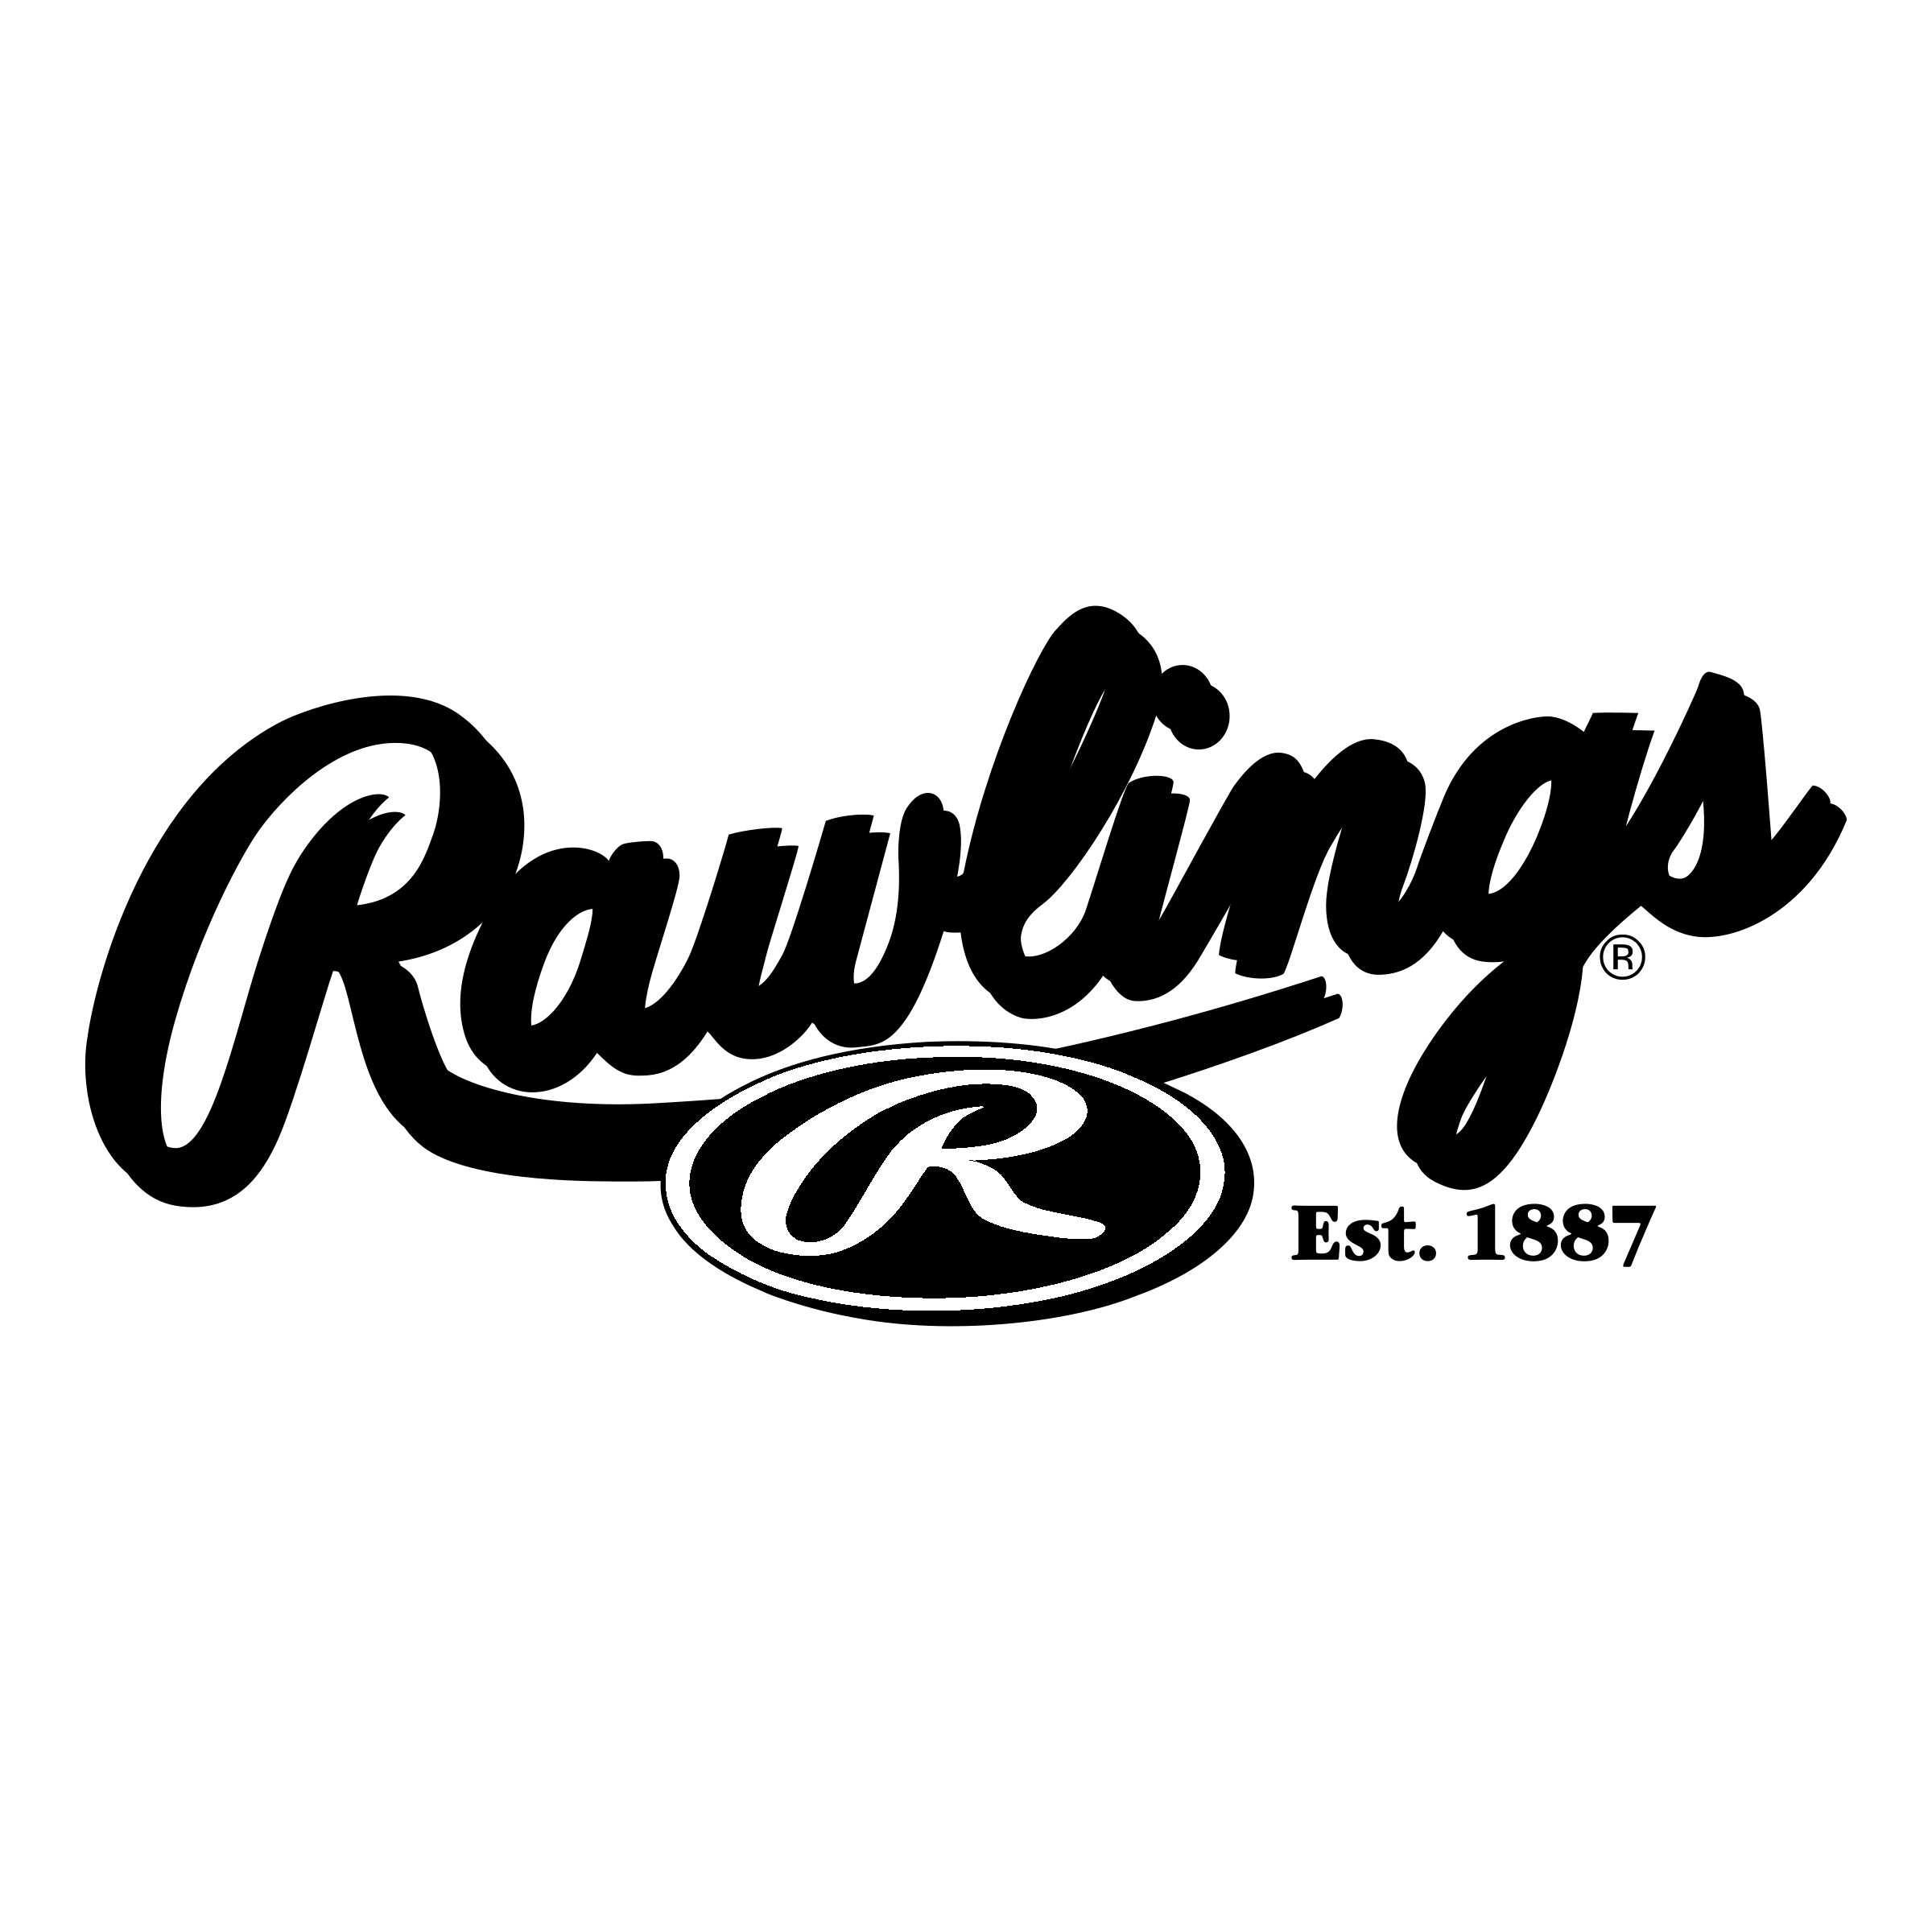 Rawlings Logo - Rawlings Logo PNG Transparent & SVG Vector - Freebie Supply